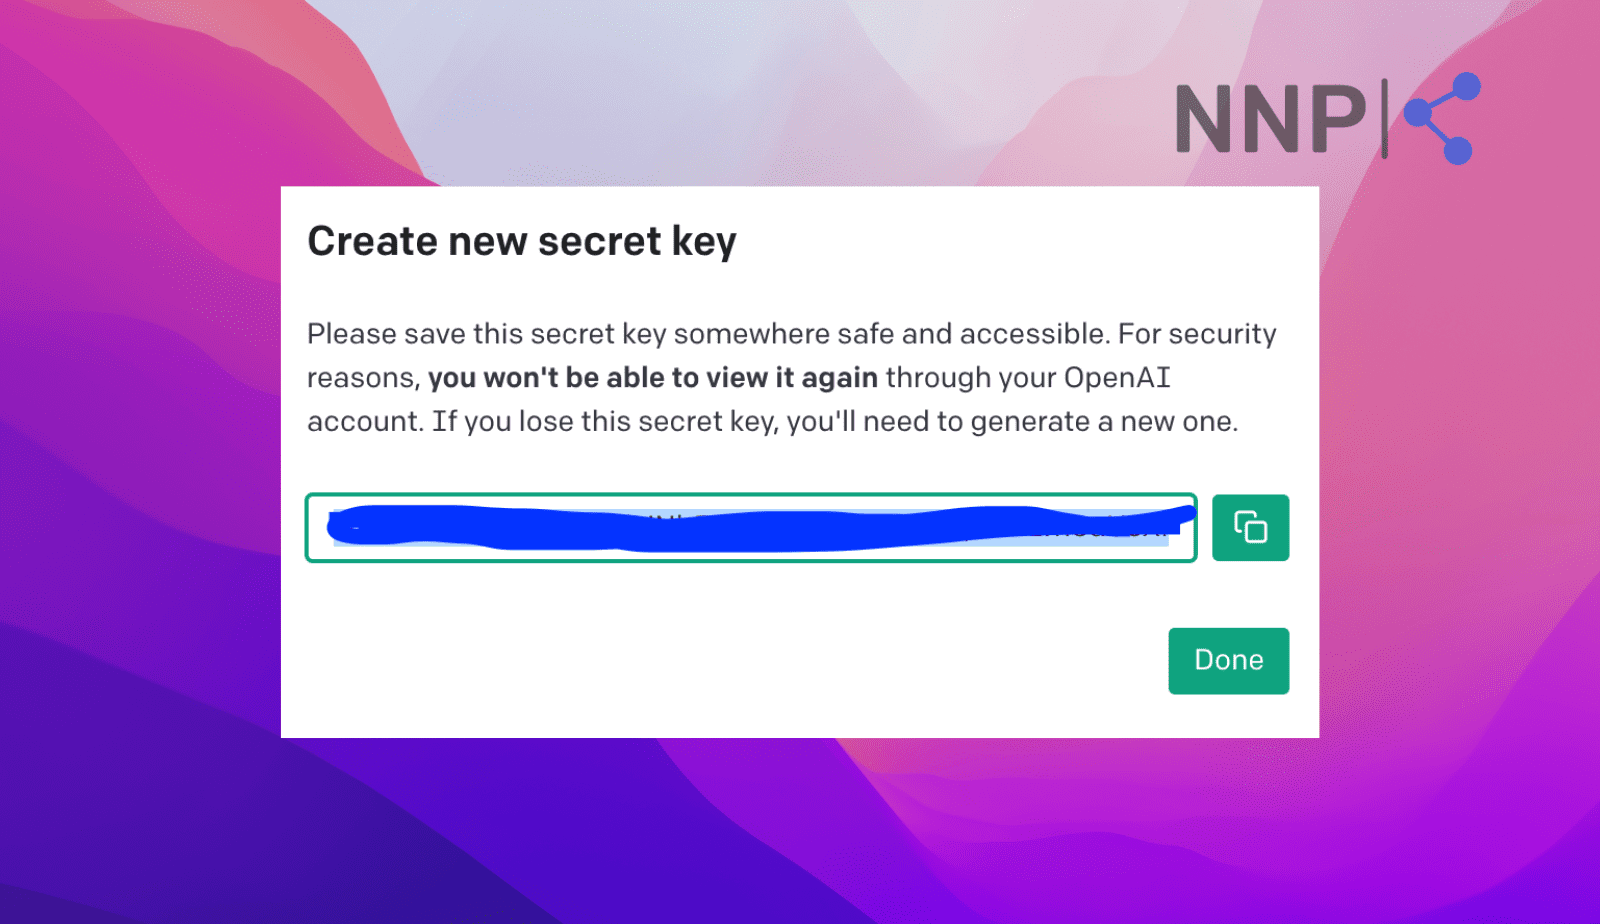 Copy the new API key